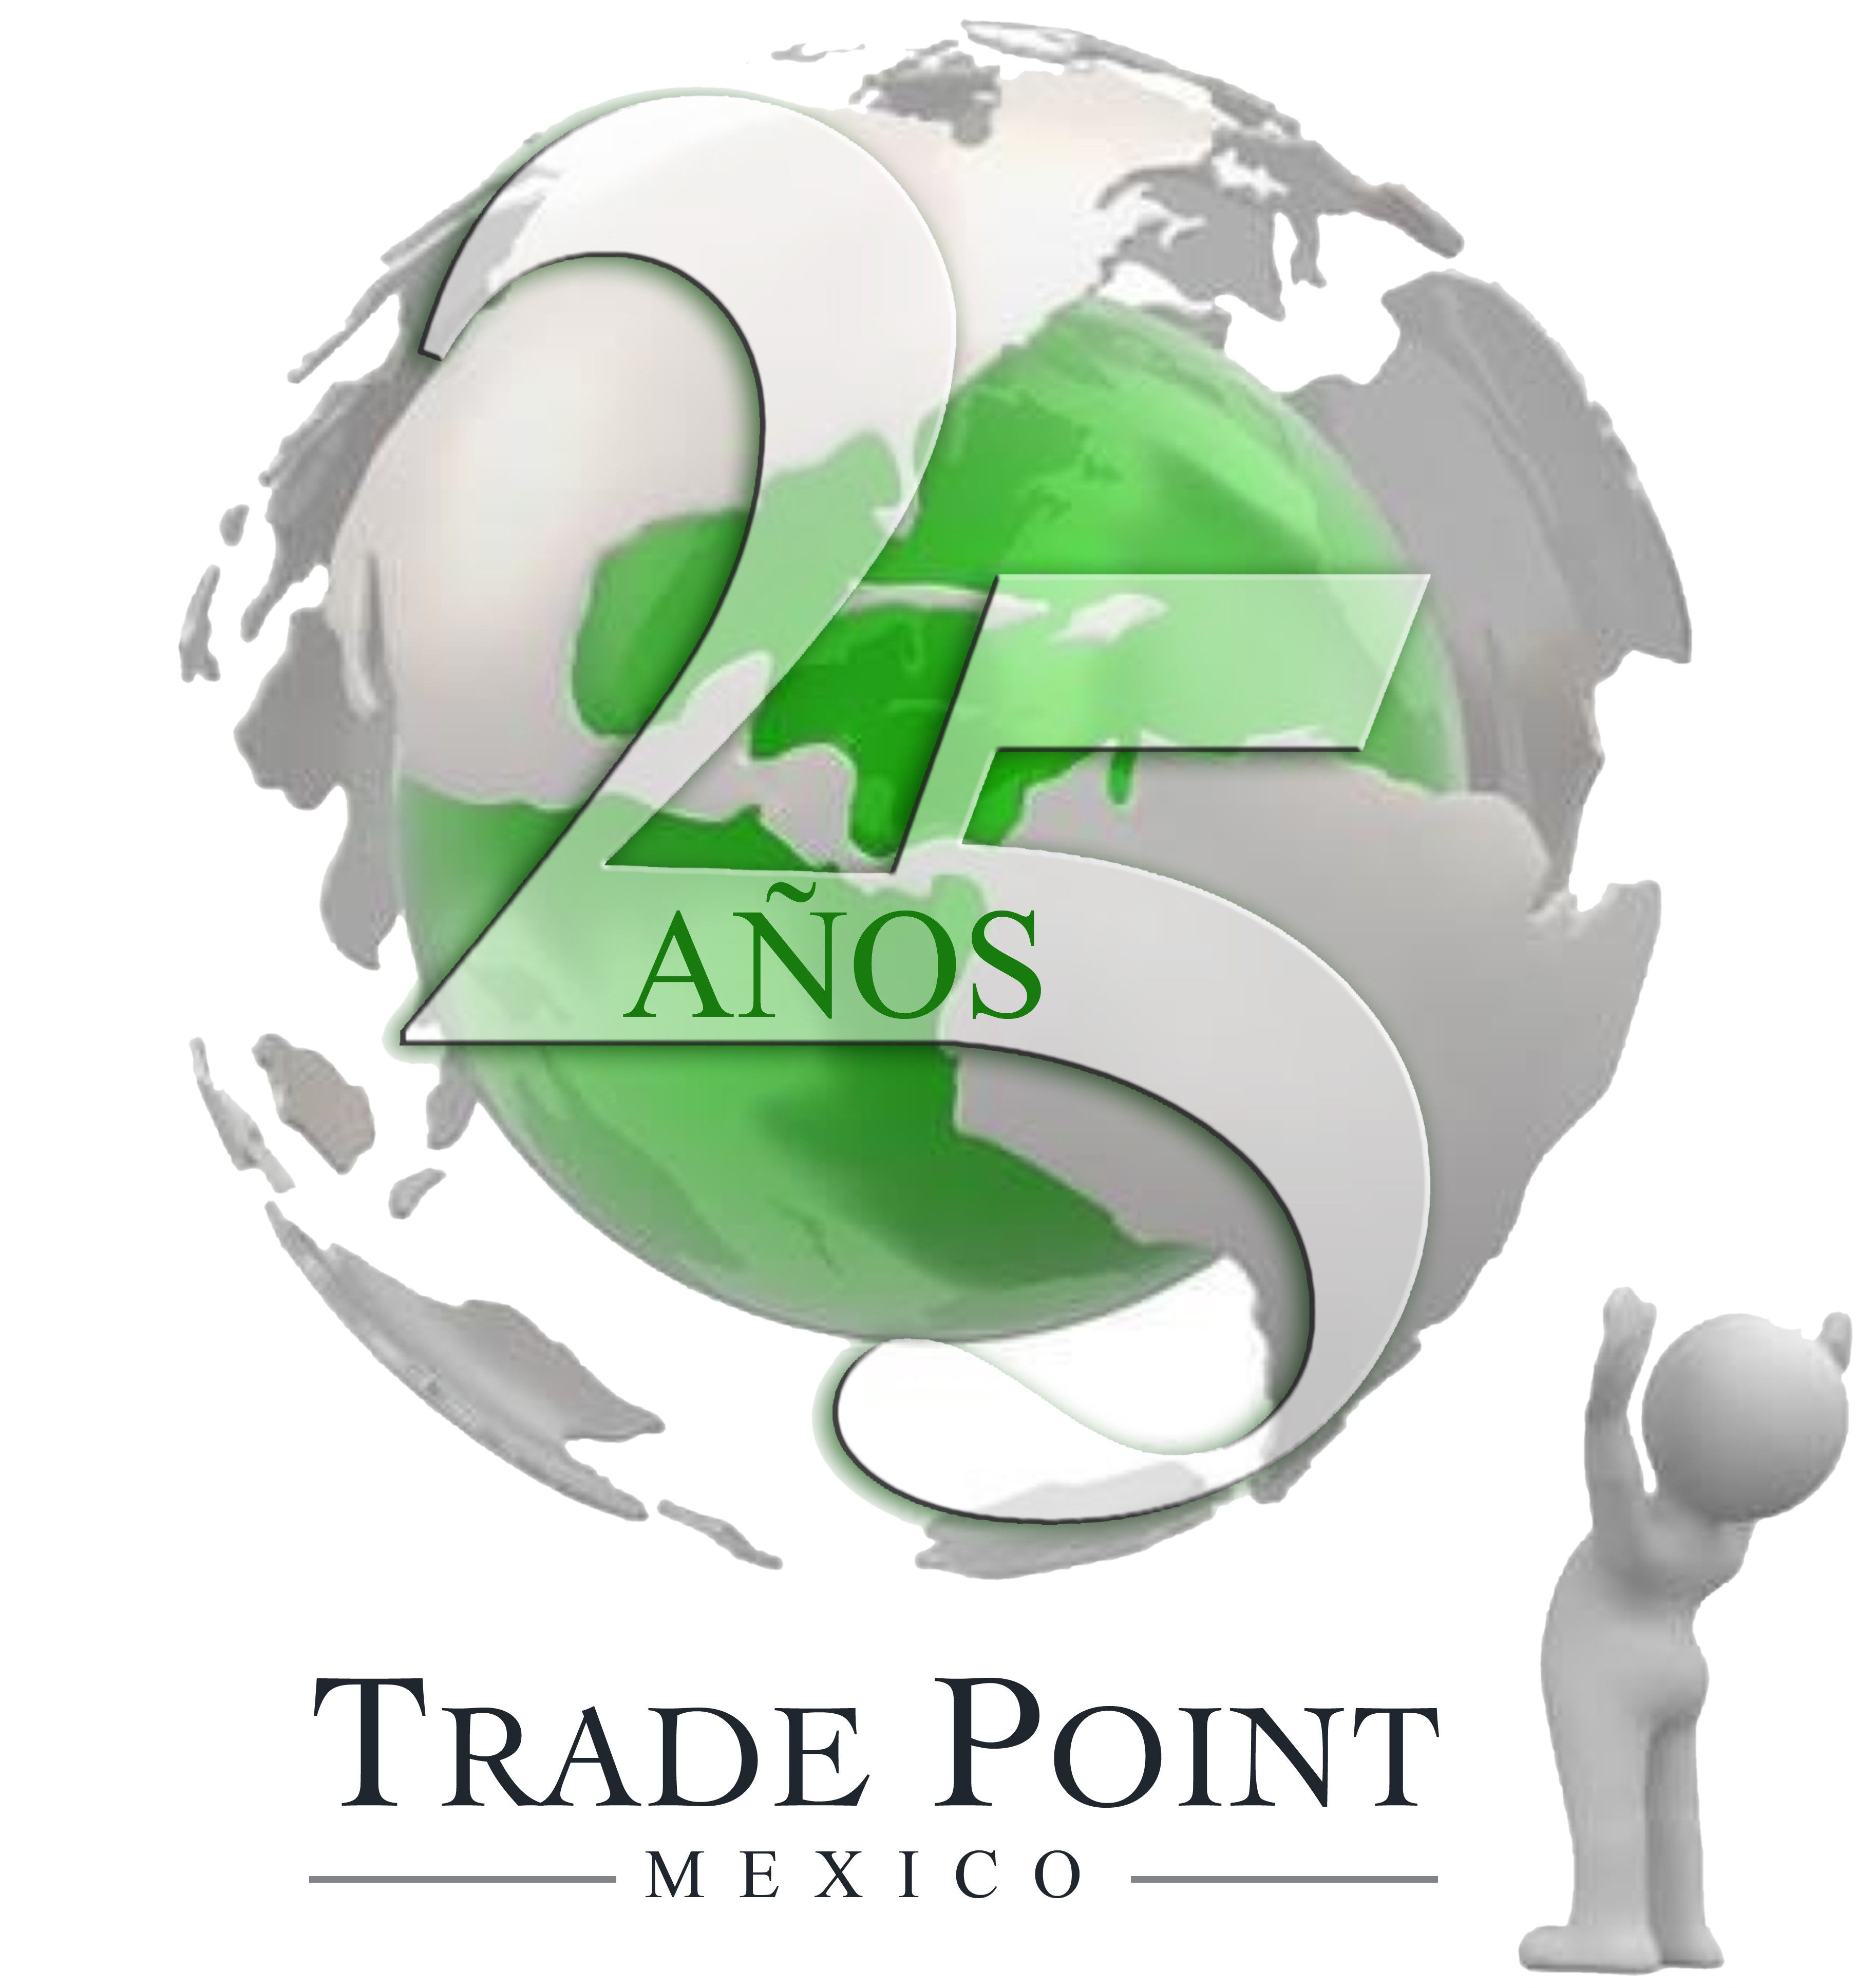 Comercializadora Trade Point México S.A. de C.V.